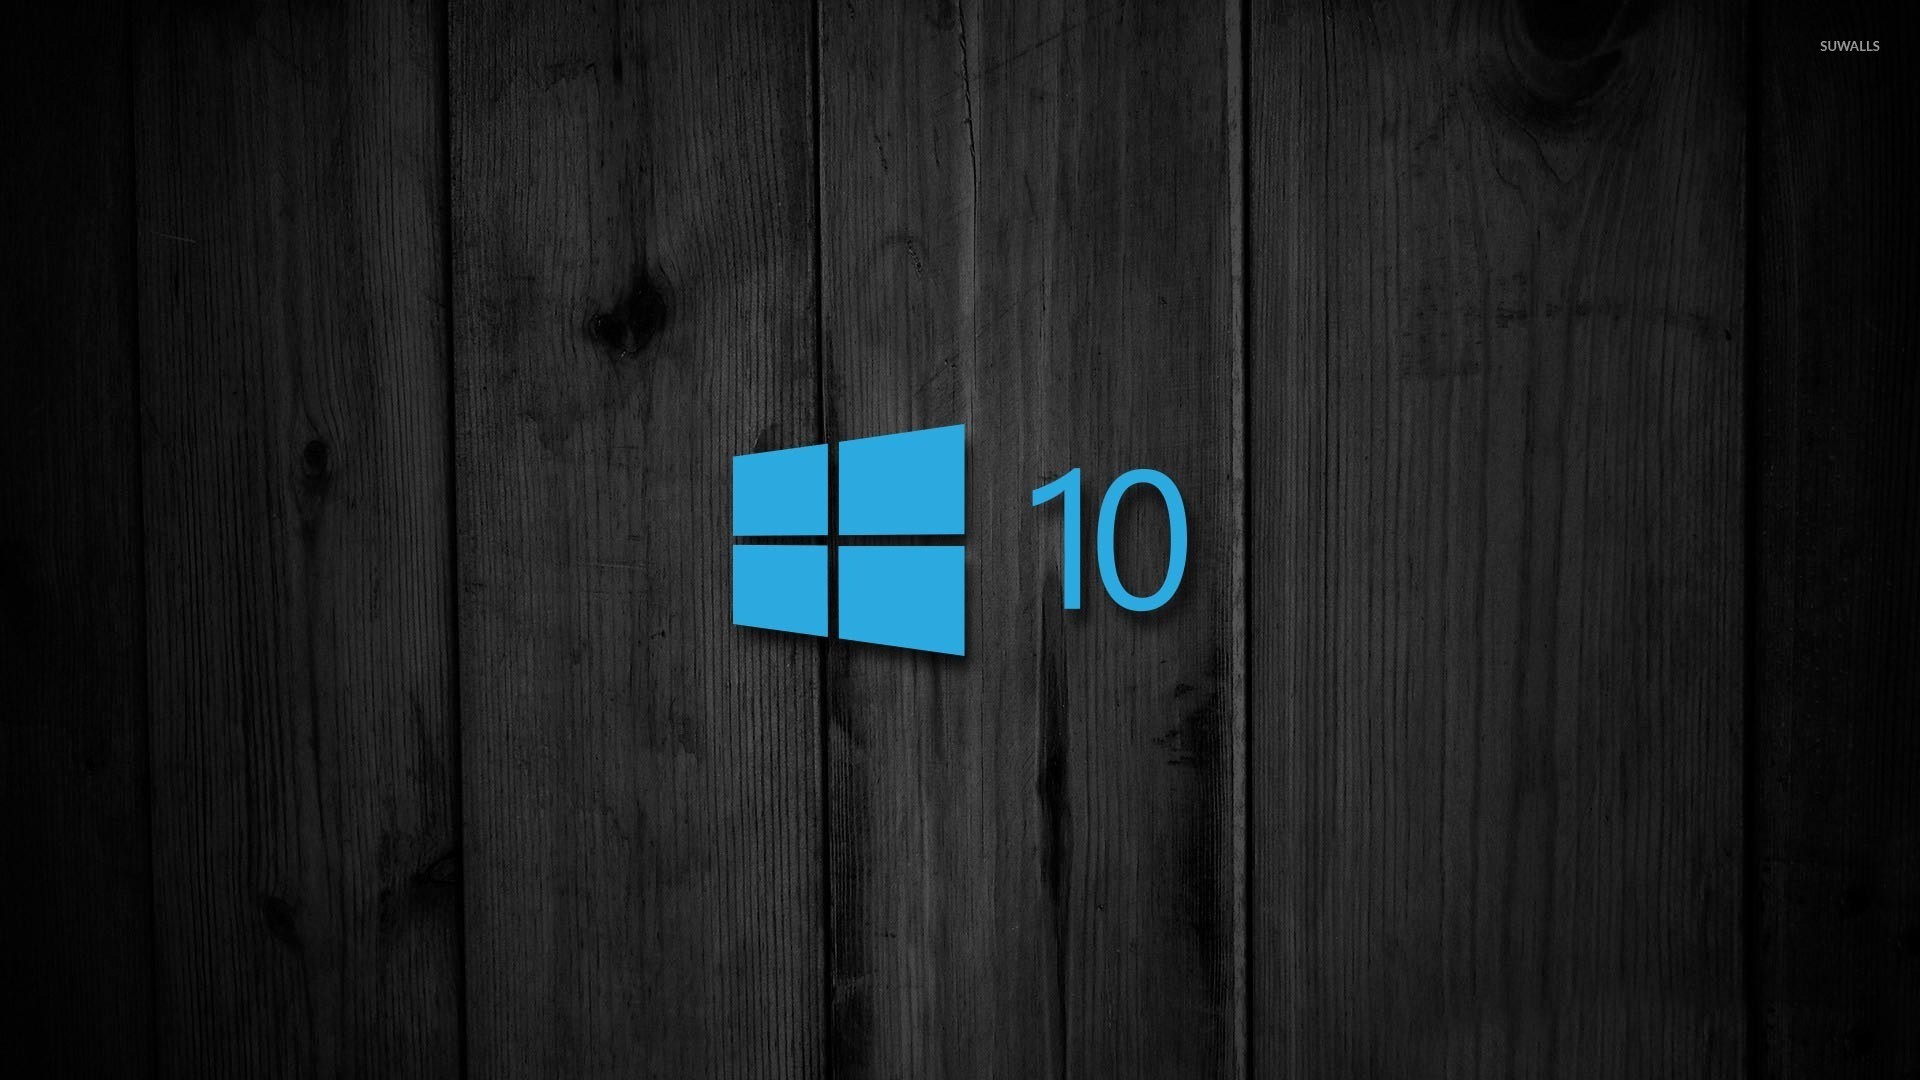 1920x1080 Windows 10 on black wooden panels [3] wallpaper